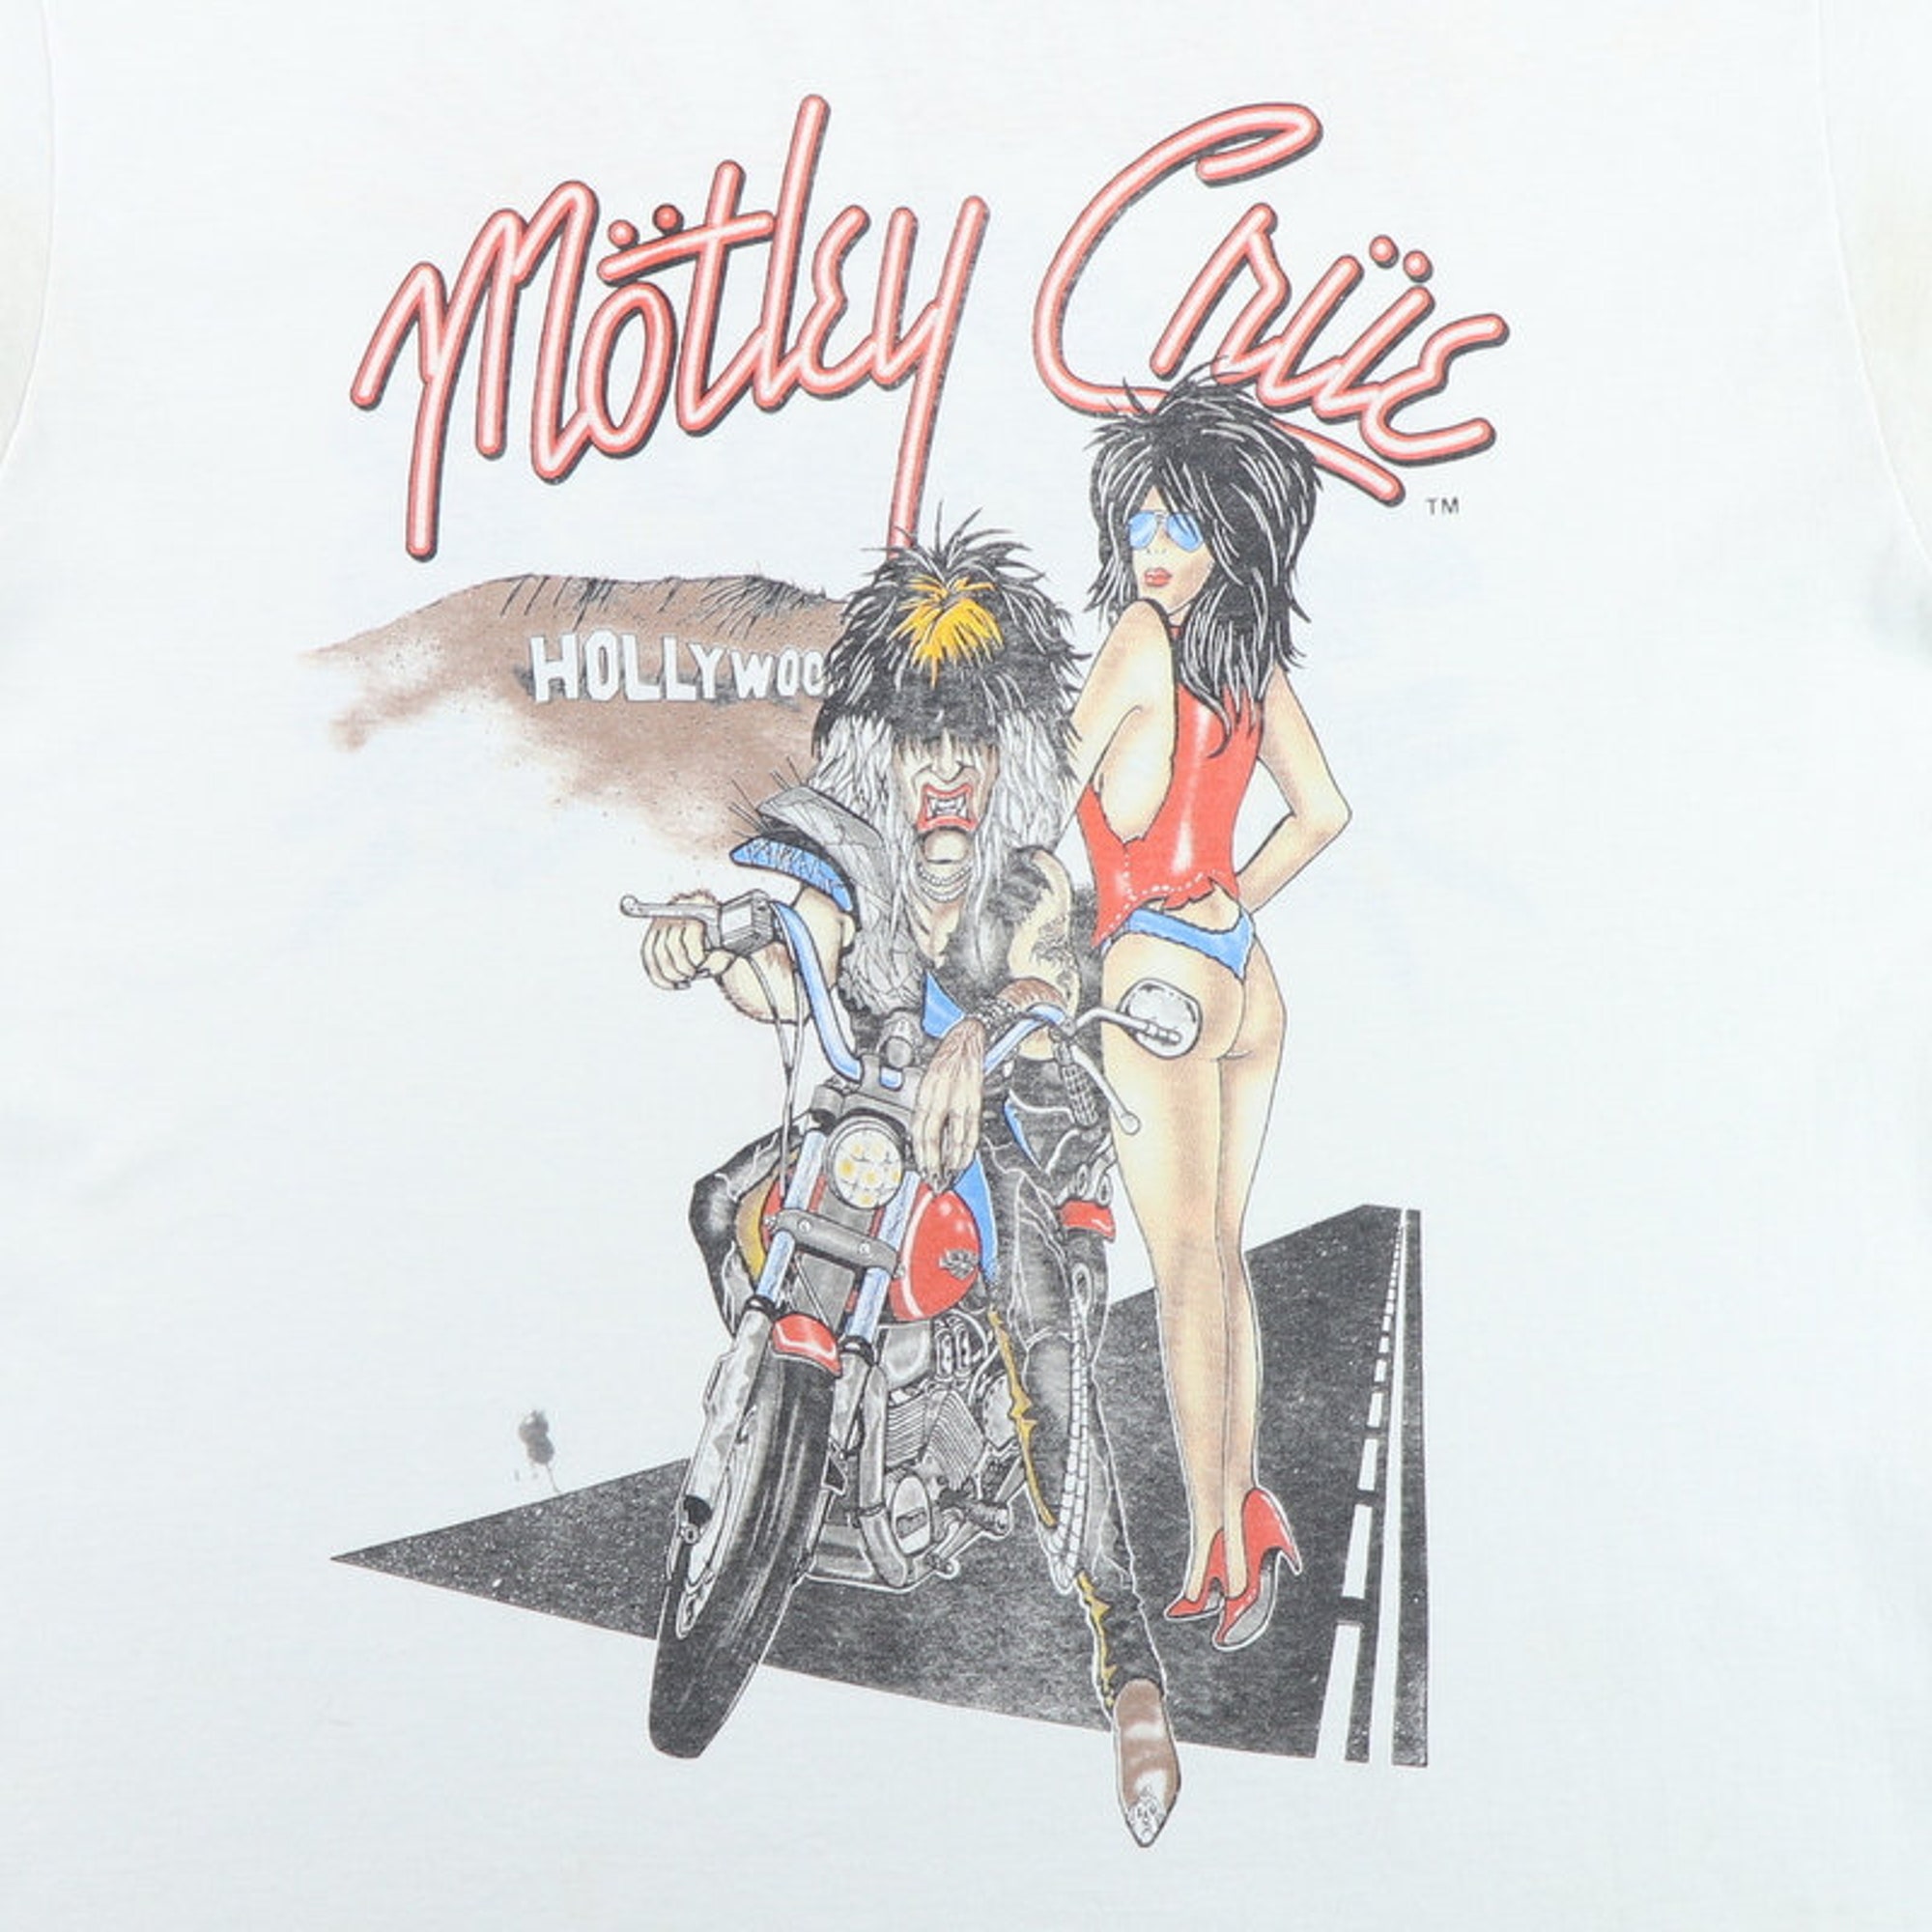 vintage 1987 Motley Crue Girls Girls Girls California Tour Shirt